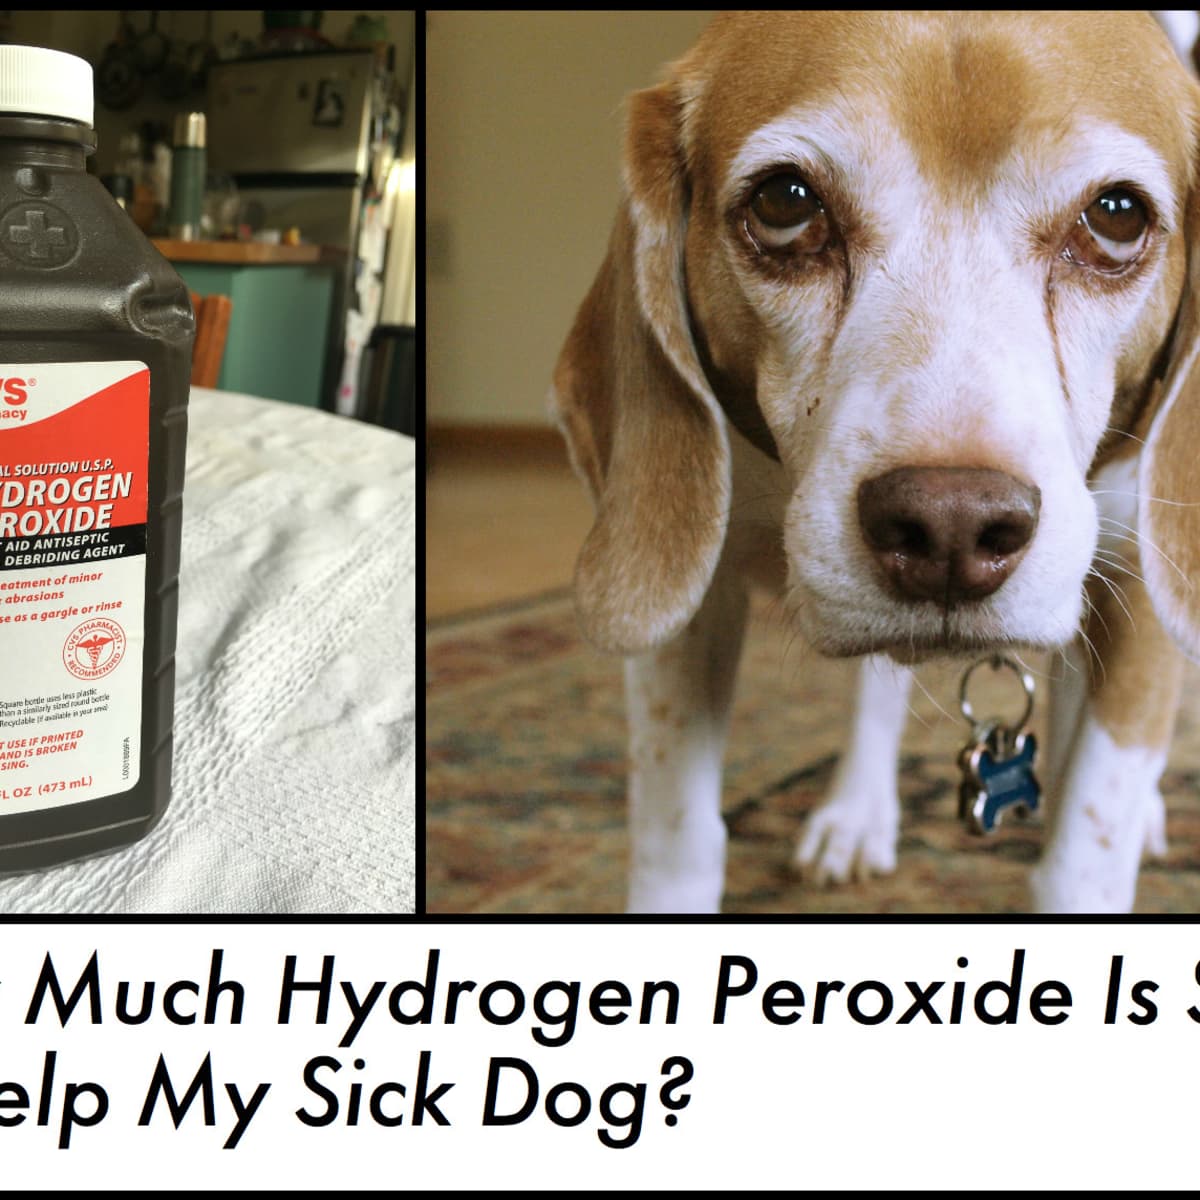 hydrogen peroxide fizzes when applied to a wound